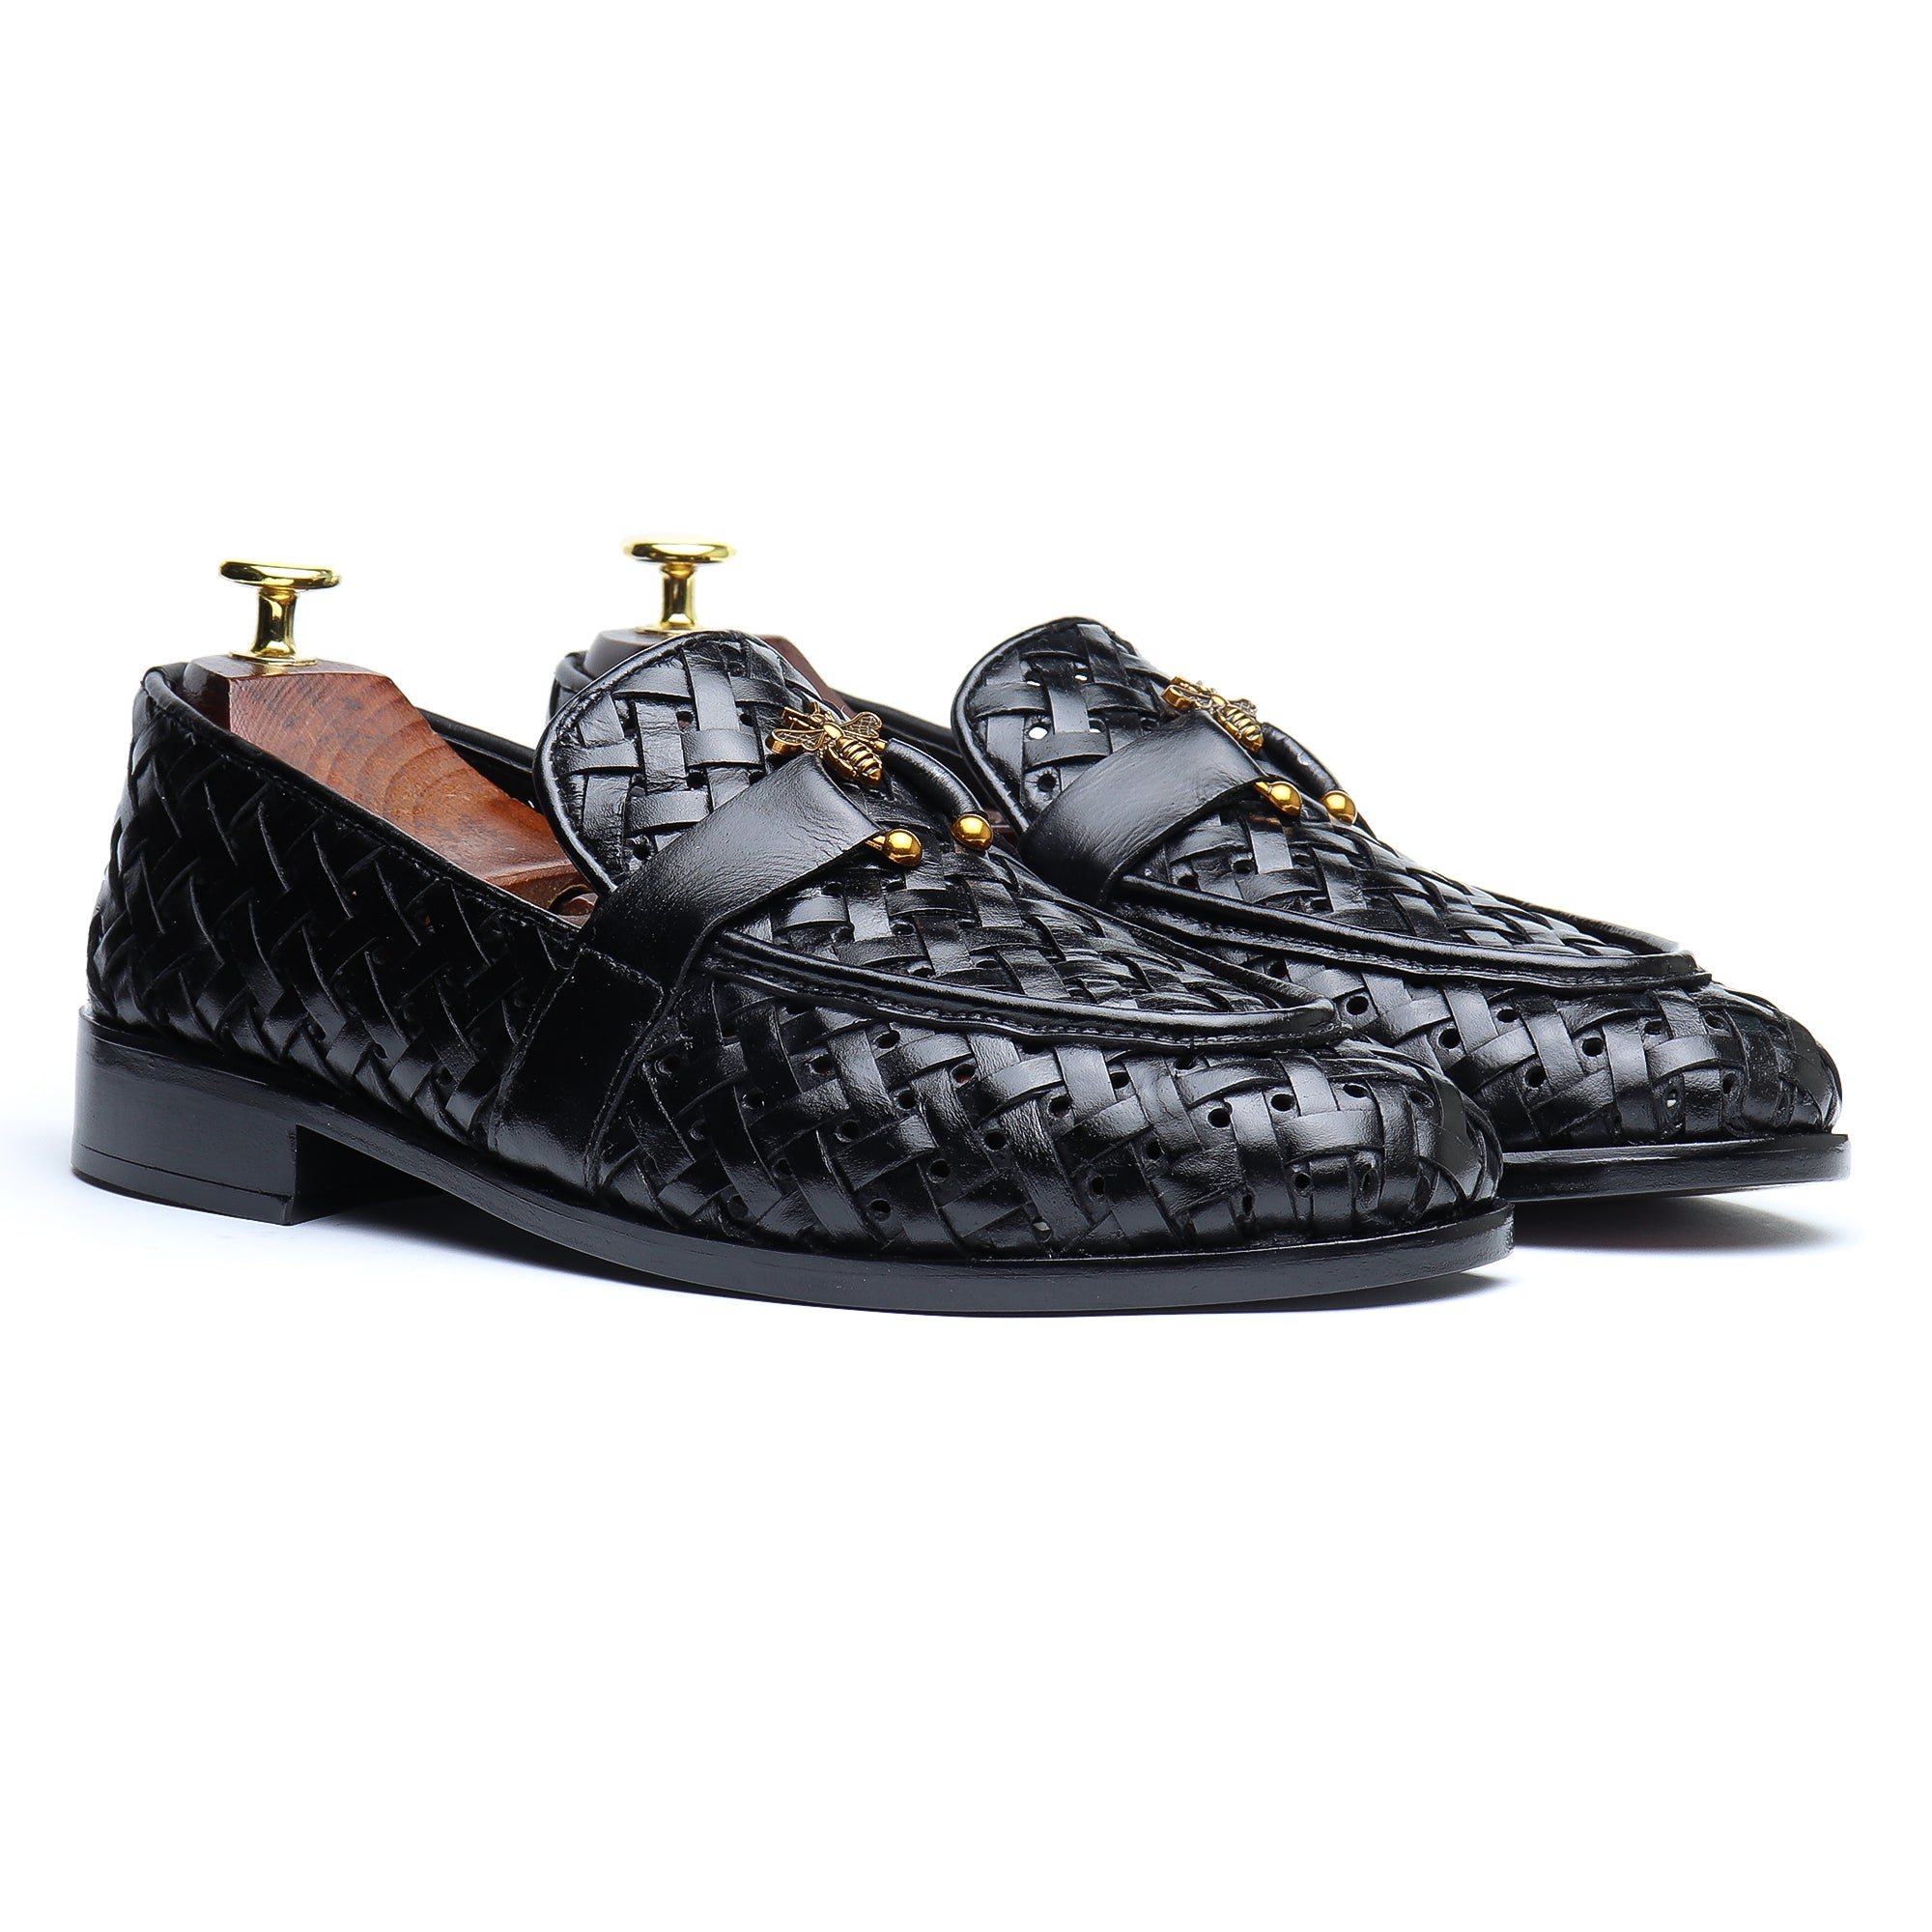 Royal Ring Knitting Black - Premium Shoes from royalstepshops - Just Rs.9000! Shop now at ROYAL STEP